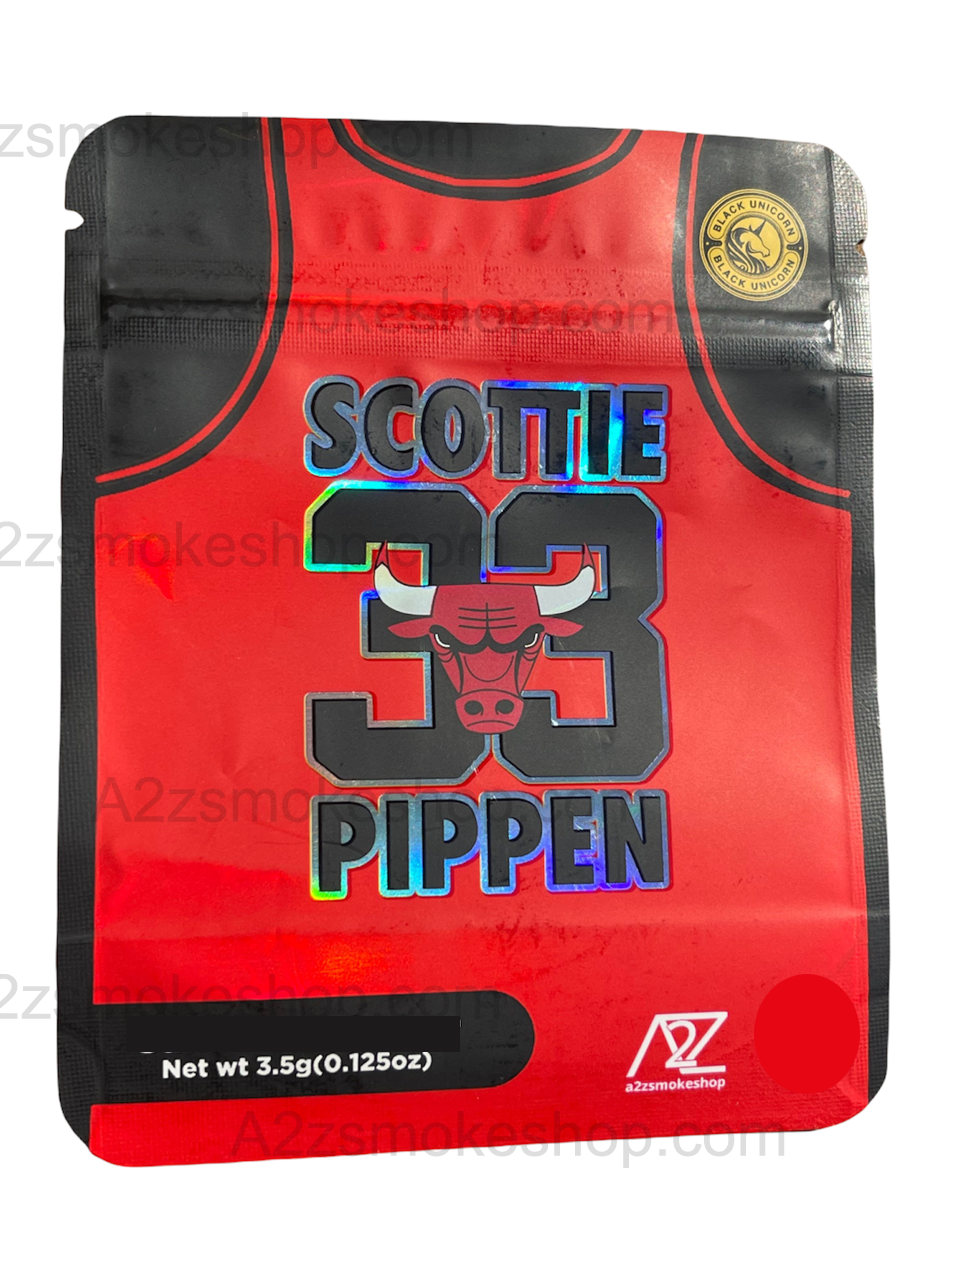 Black Unicorn - Scotti Pippen #33 Bulls Holographic Mylar bag 3.5g